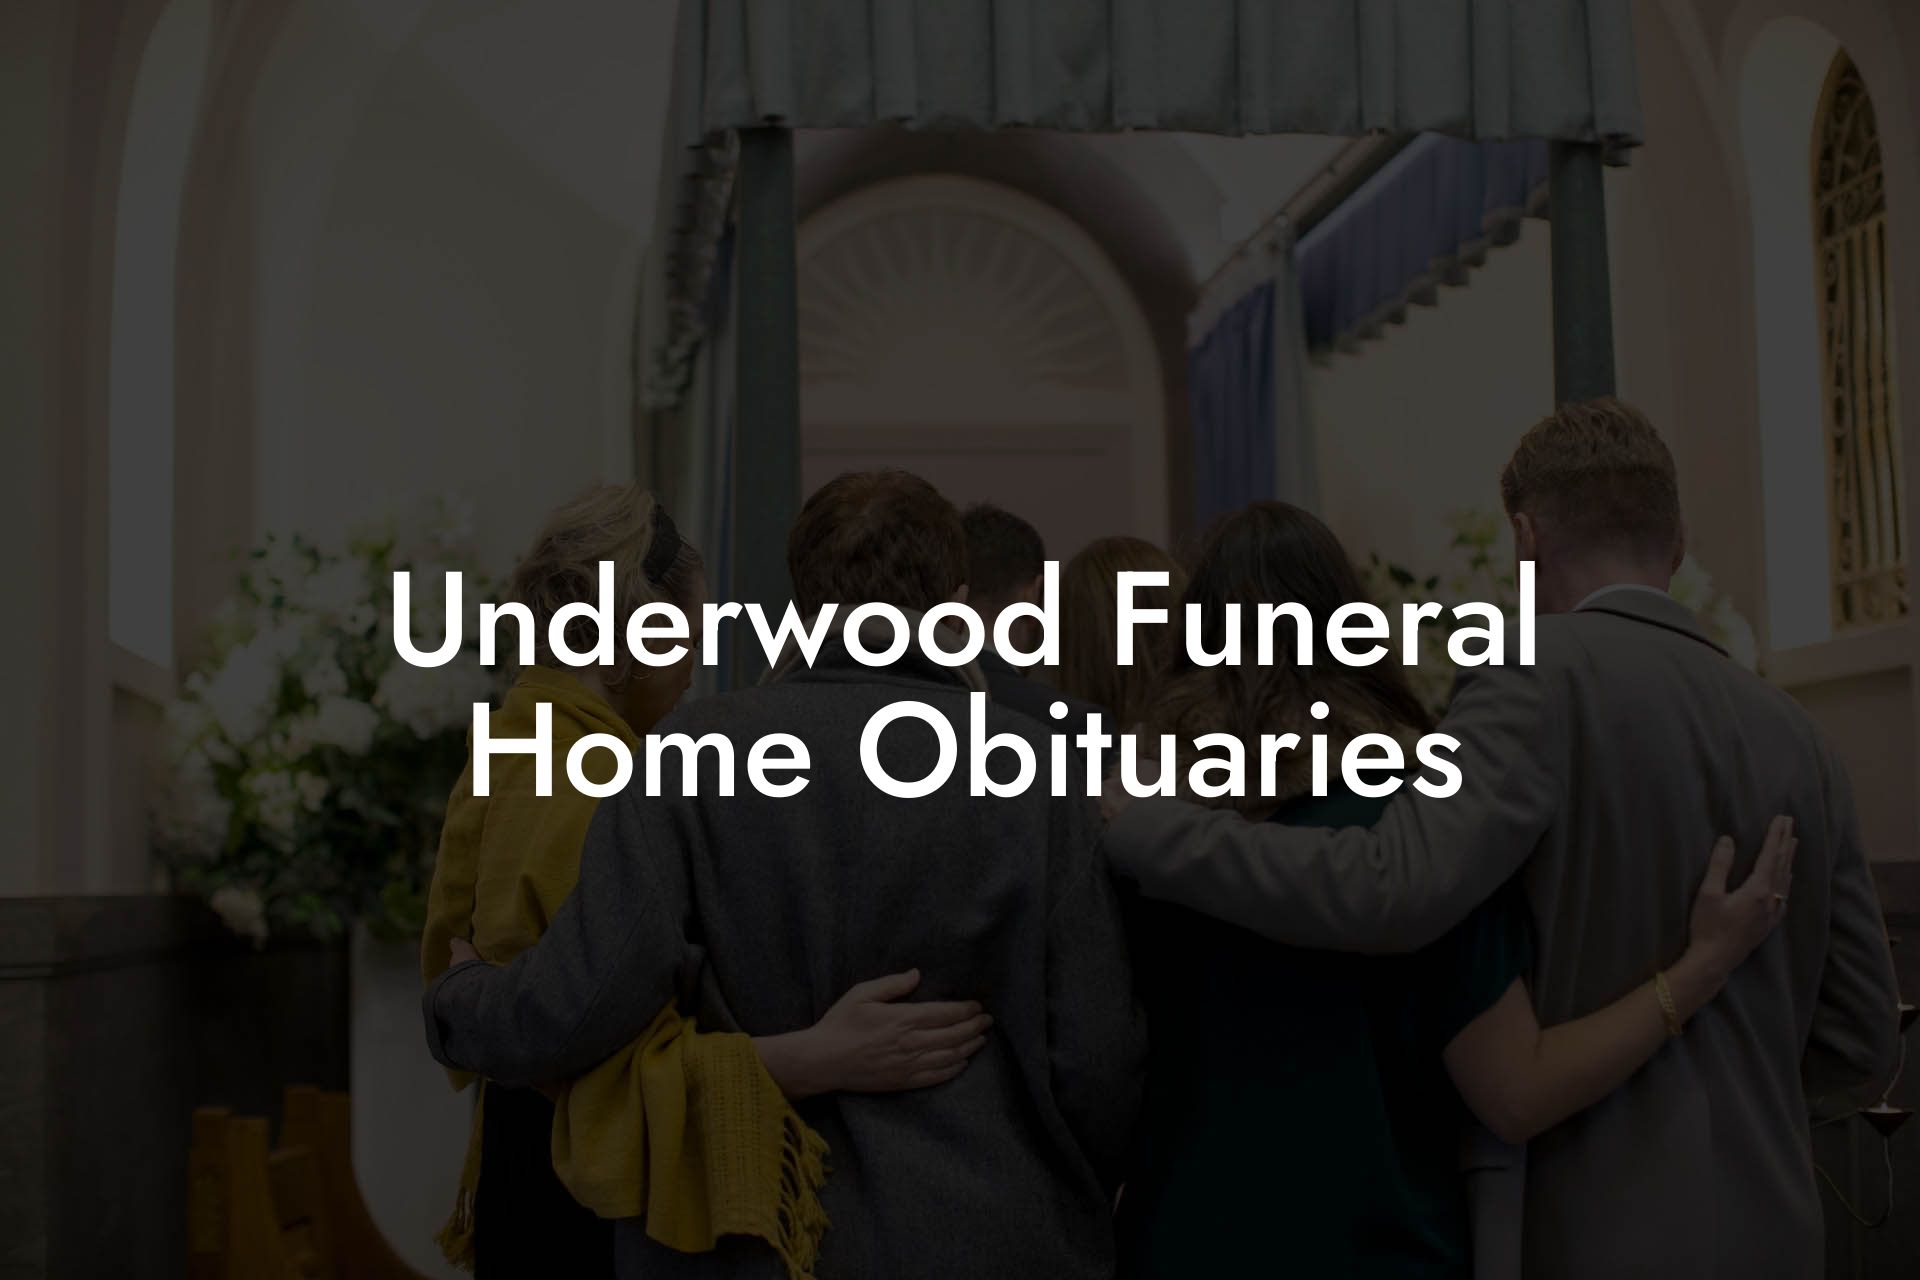 Underwood Funeral Home Obituaries